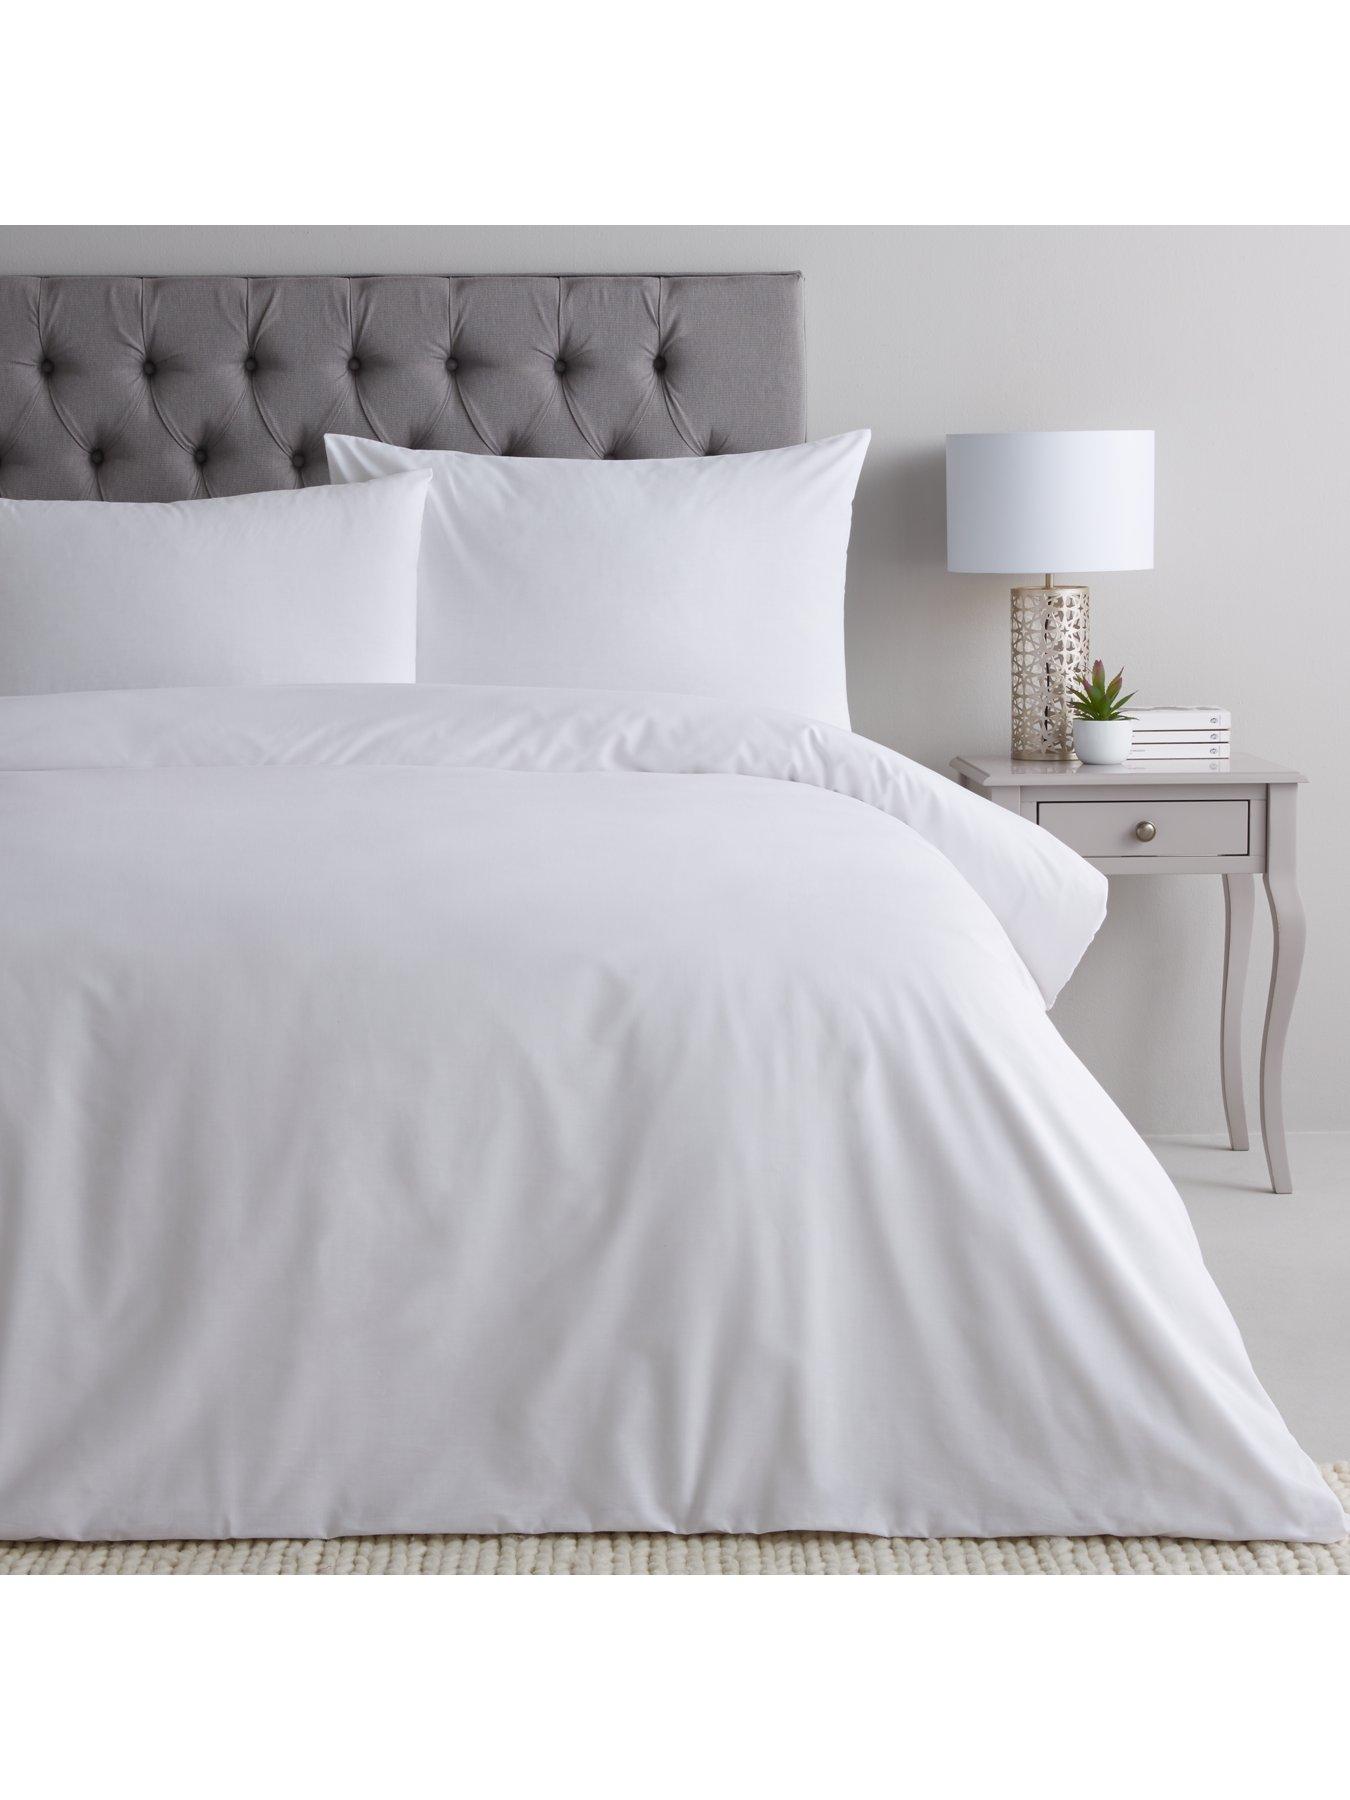 Latest Offers White Bedroom Duvet Covers Bedding Home